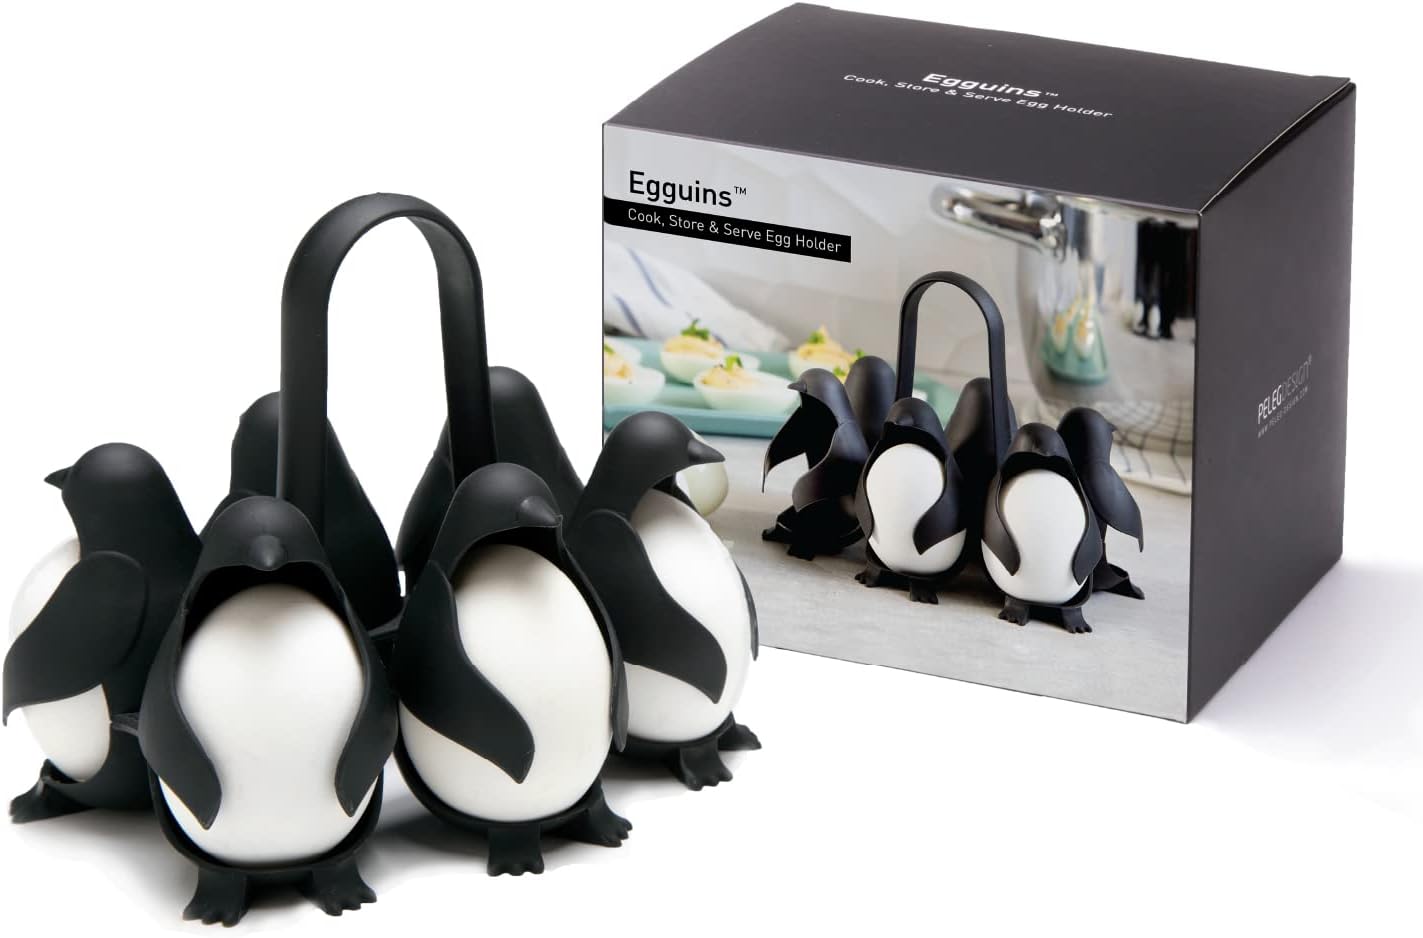 Egguins-Eierhalter-by-PELEG-Design-berlindeluxe-pinguine-schwarz-verpackung